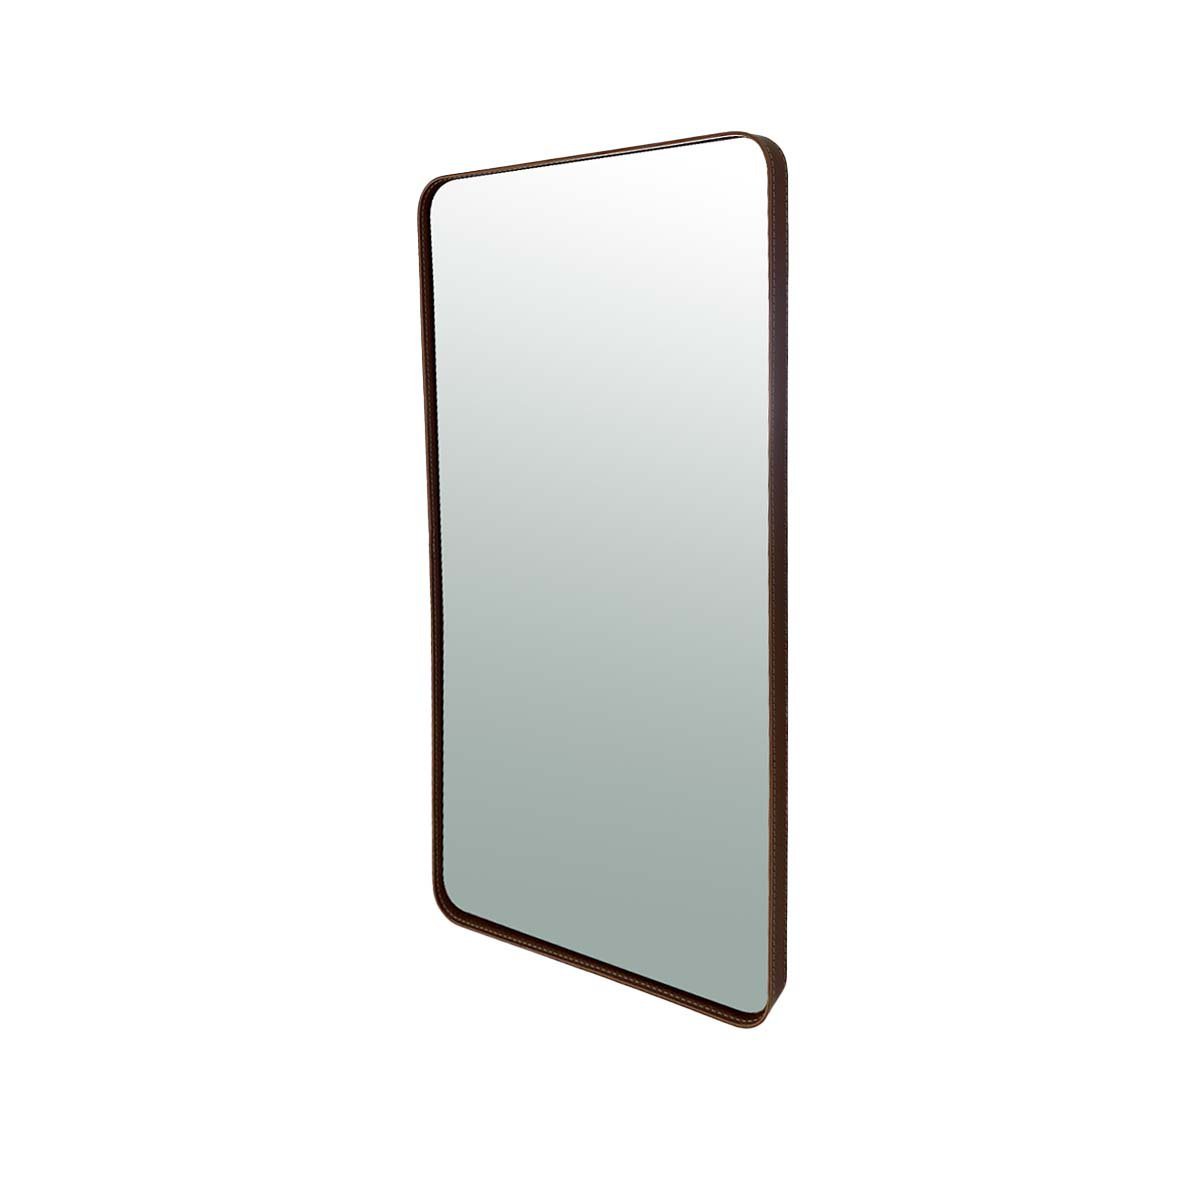 Espelho Retangular Decorativo Moldura Corino 60x35 - Marrom